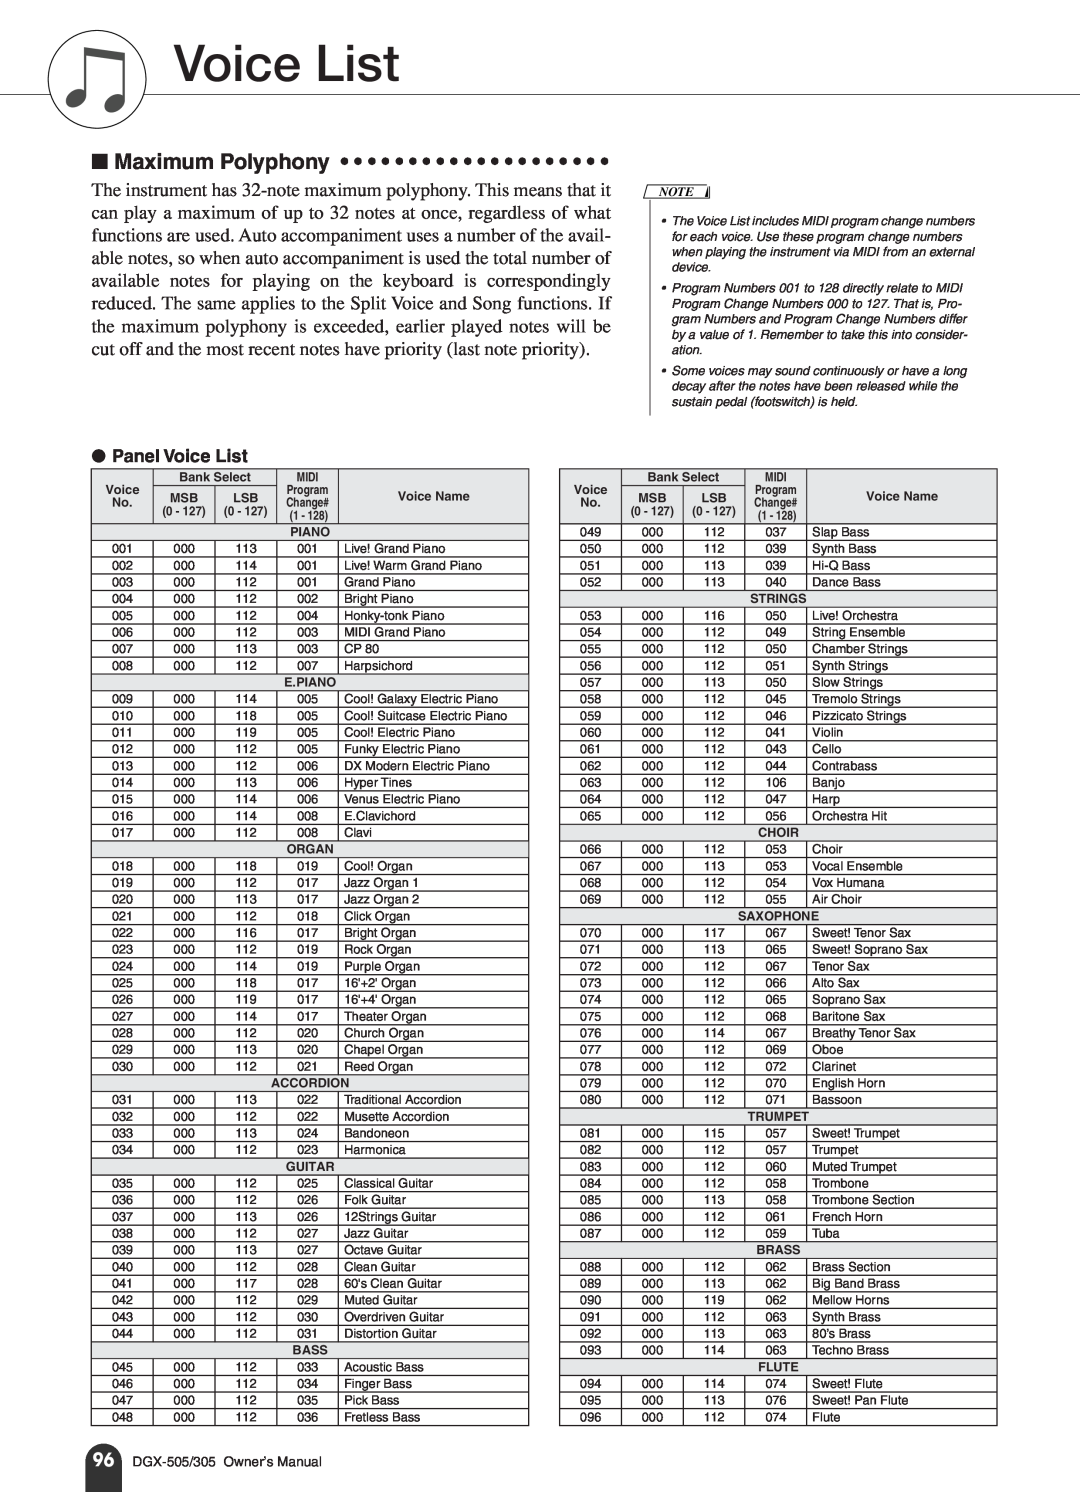 Yamaha DGX-305 manual Maximum Polyphony, Panel Voice List, DGX-505/305 Owner’s Manual 